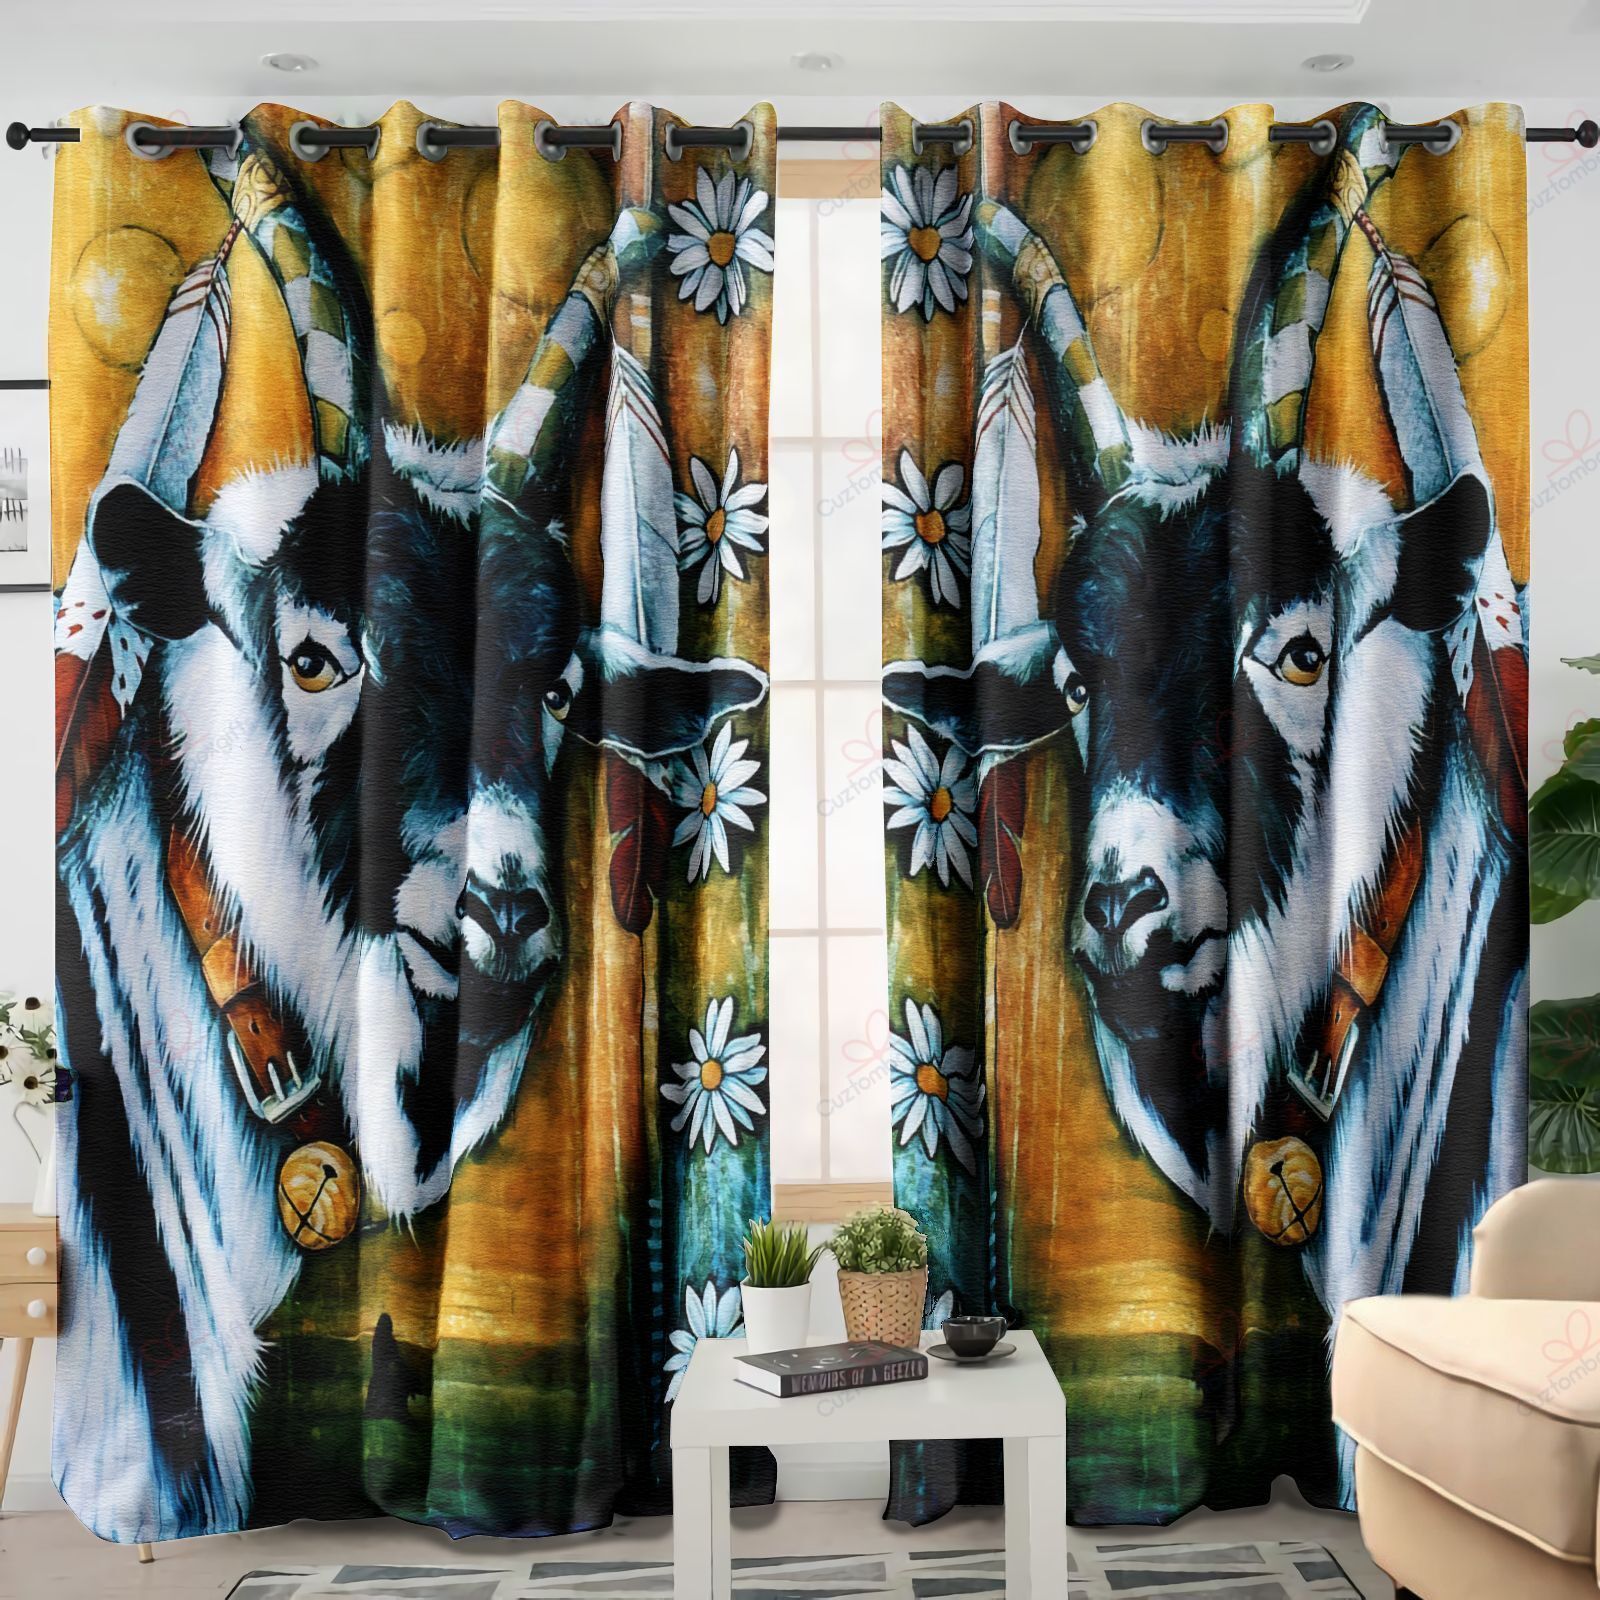 goat art daisy flower printed window curtain home decor 7872